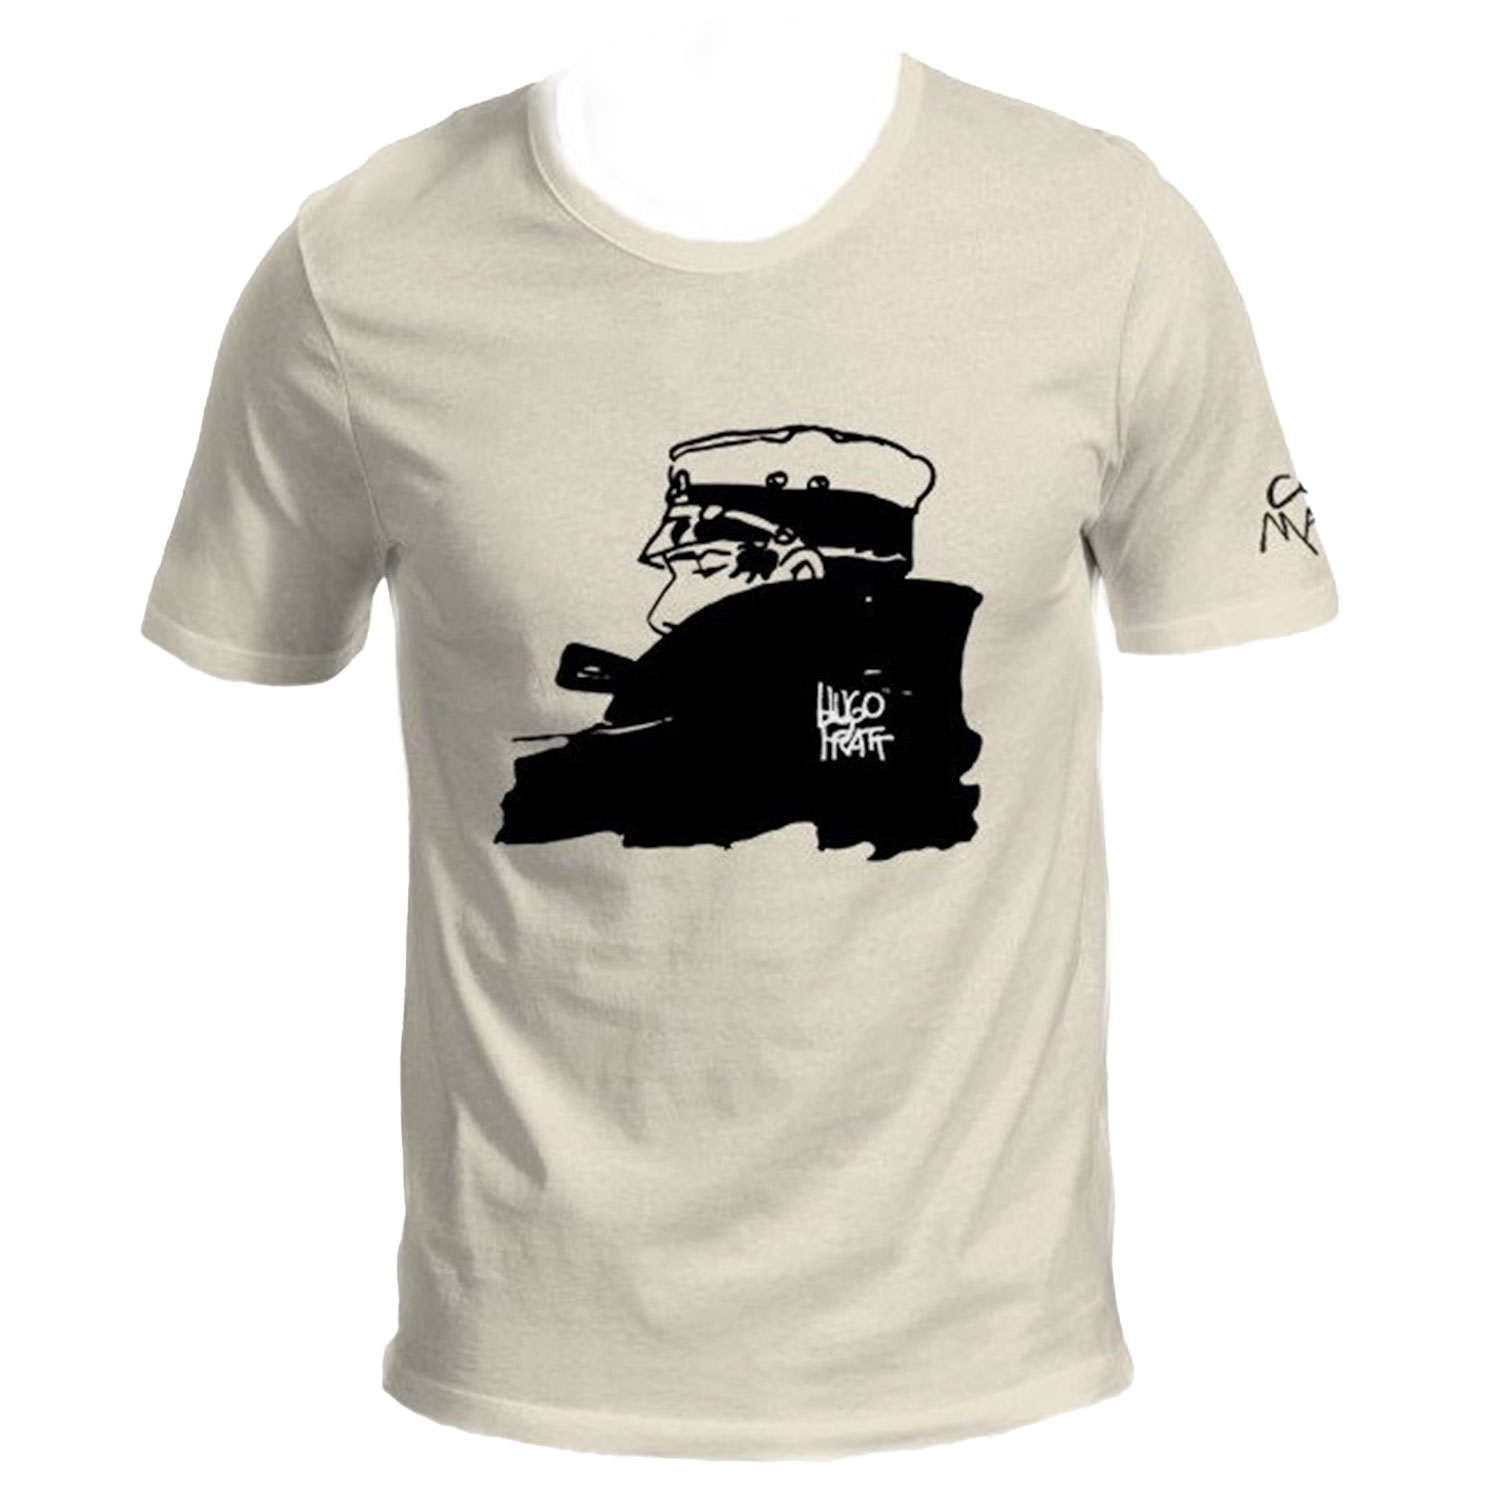 Hugo Pratt T-shirt : Corto Maltese , Nocturnal - Ecru - Size XL